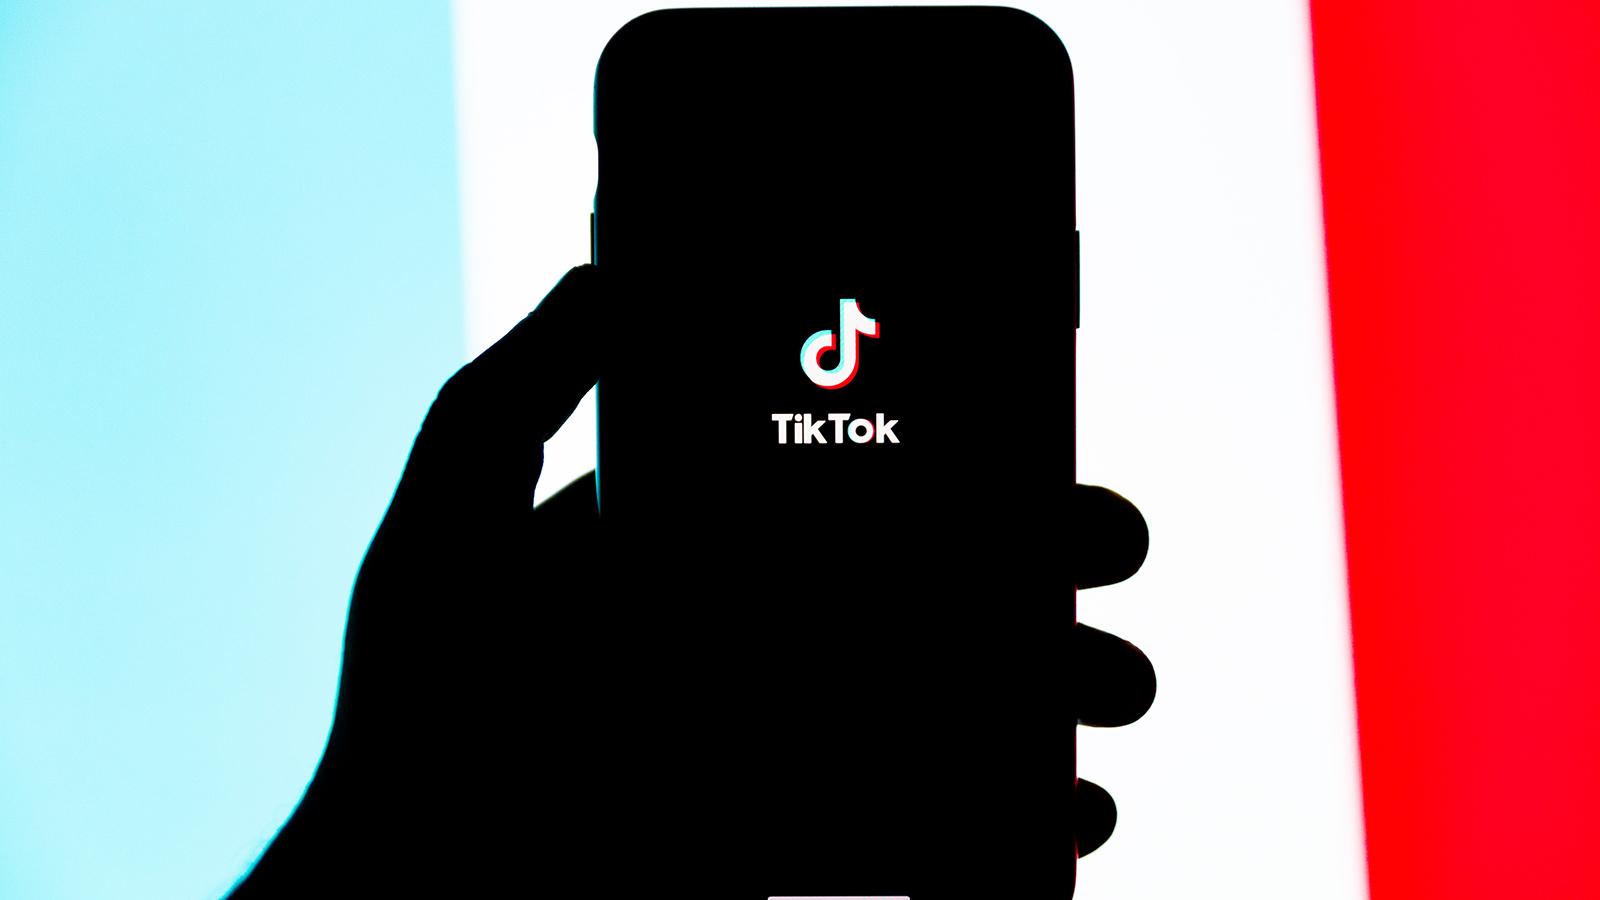 Person holding phone with TikTok logo.